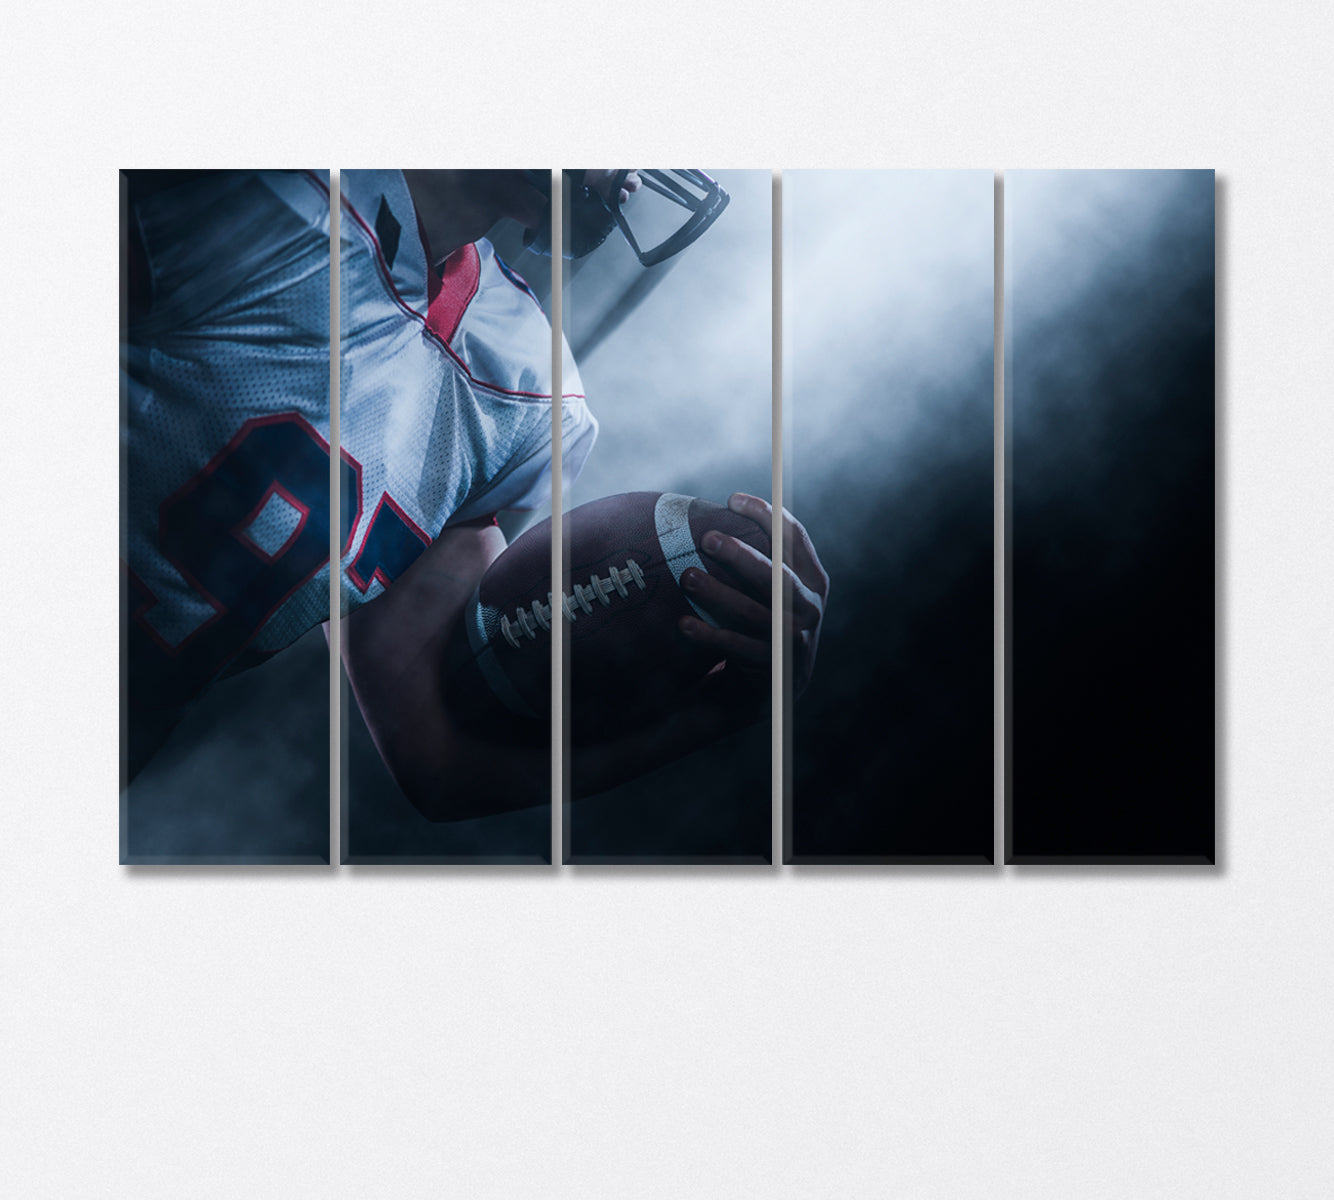 American Football Player Holding Ball Canvas Print-Canvas Print-CetArt-5 Panels-36x24 inches-CetArt